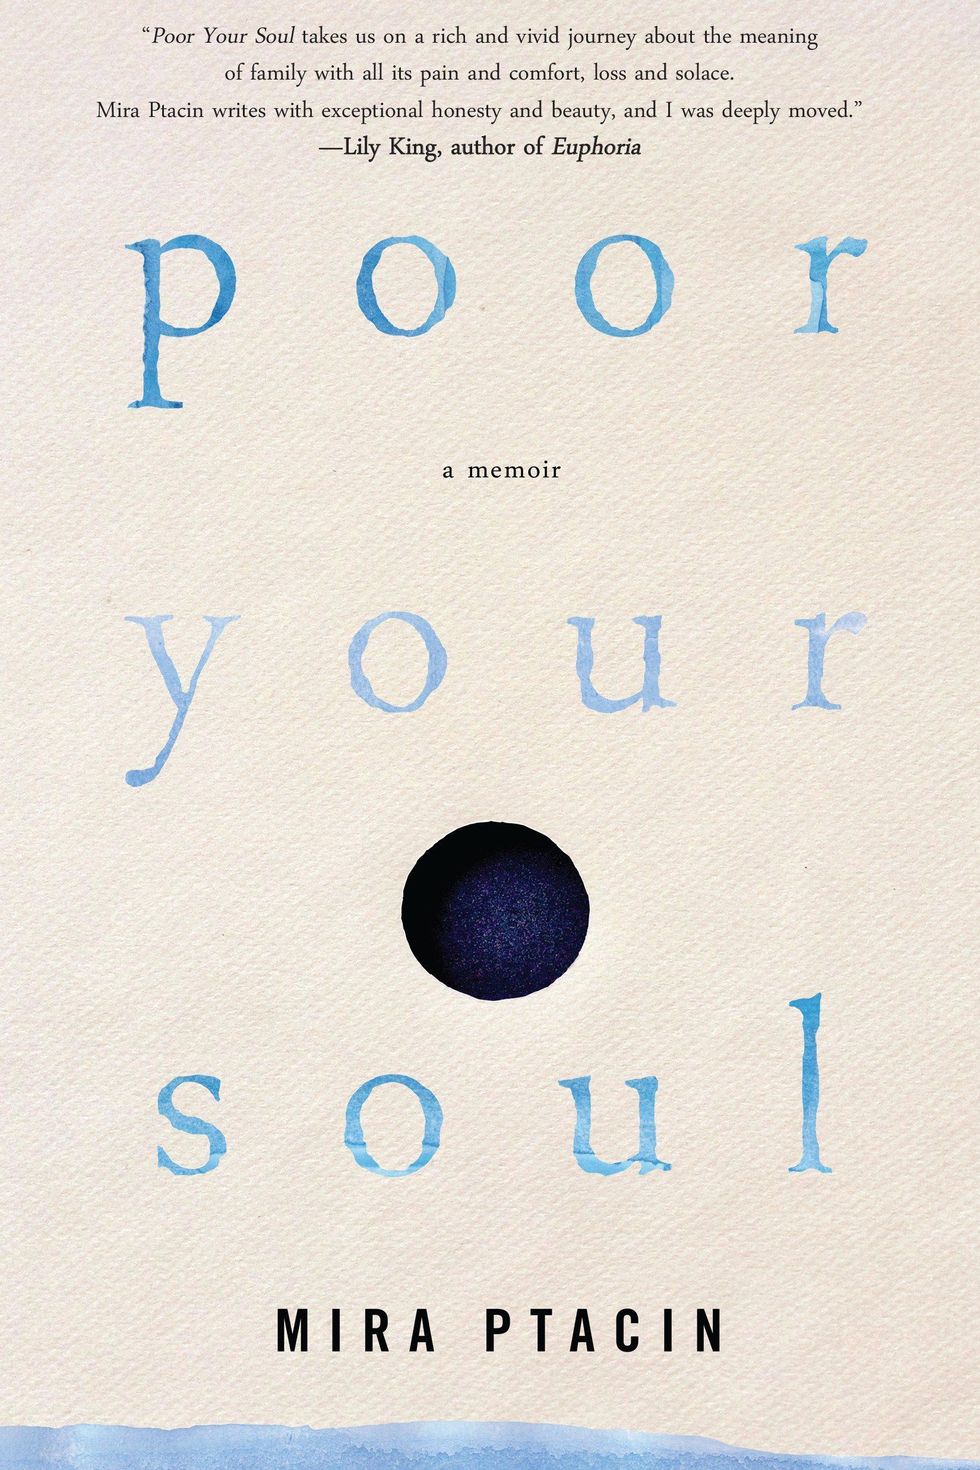 Poor Your Soul by Mira Ptacin